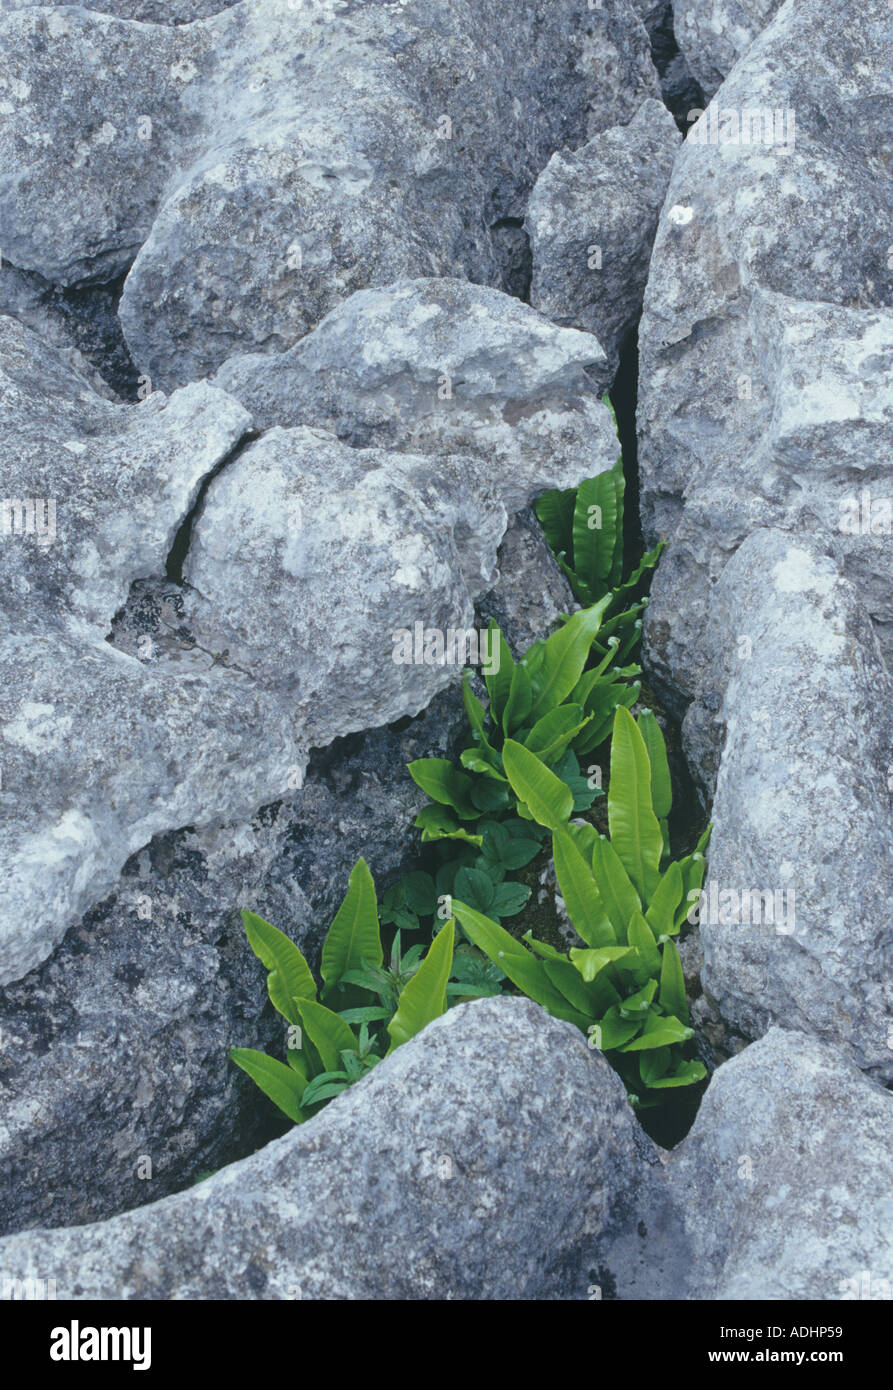 Harts tongue fern in limestone Stock Photo